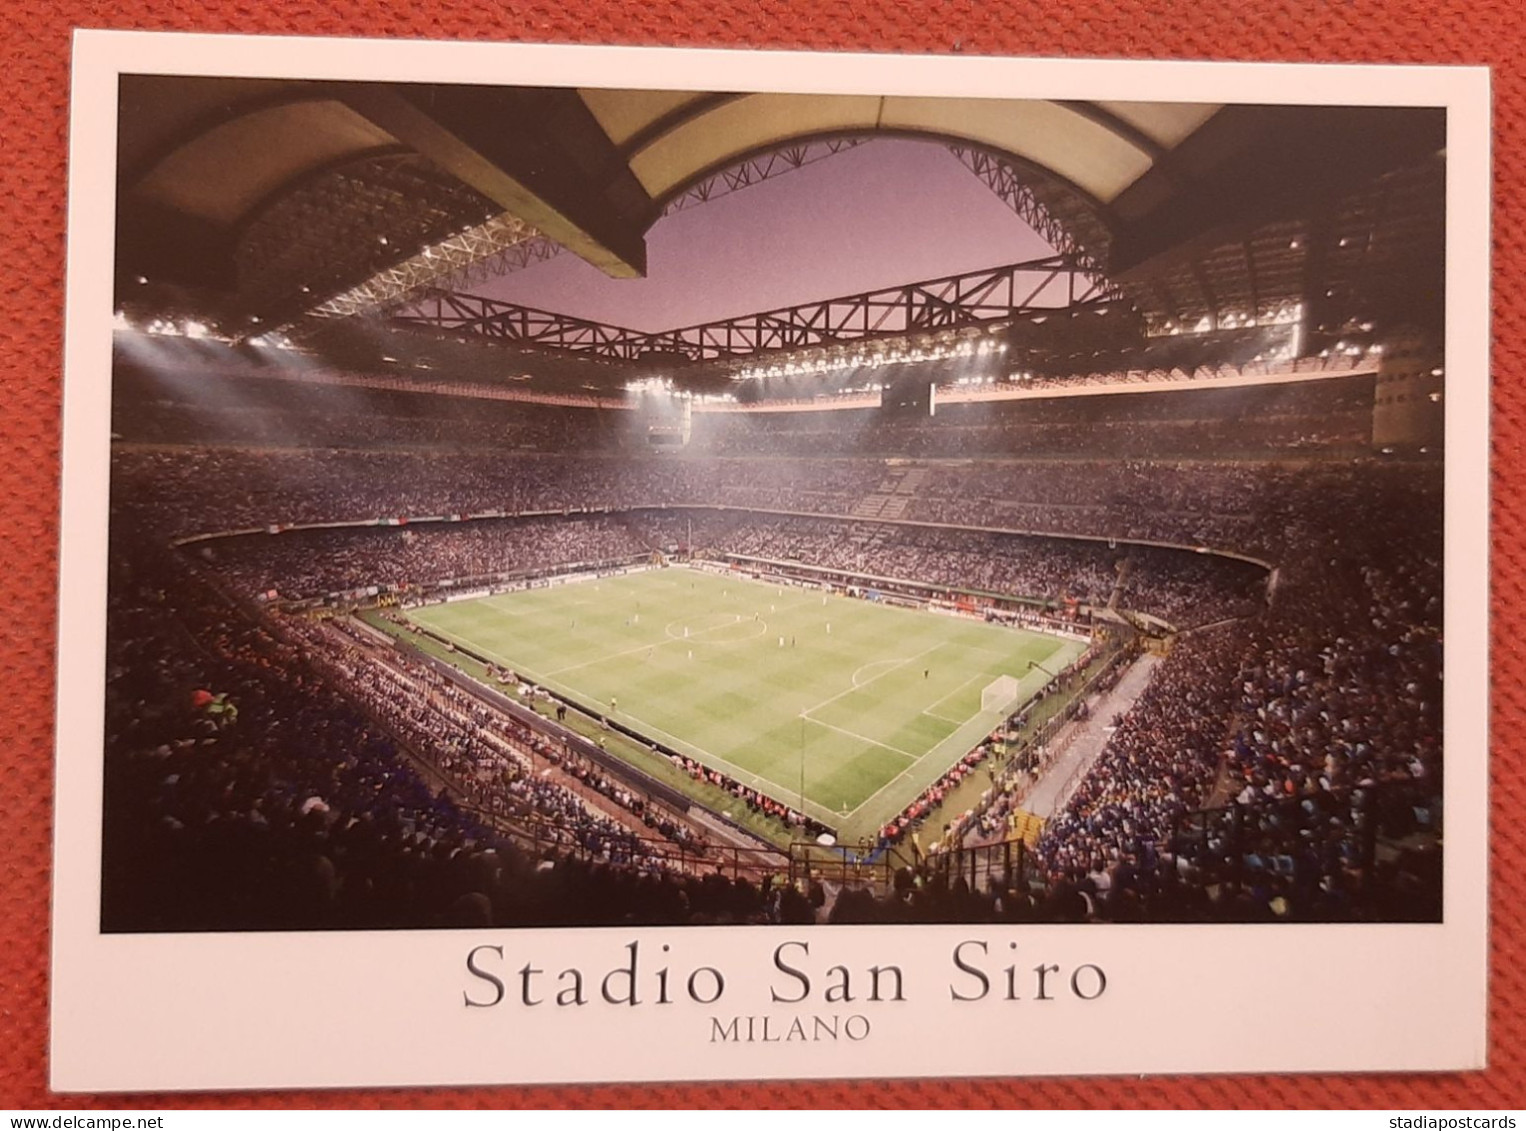 Milano Milan Inter San Siro Giuseppe Meazza Cartolina Stadio Postcard Stadion AK Carte Postale Stade Estadio Stadium - Soccer